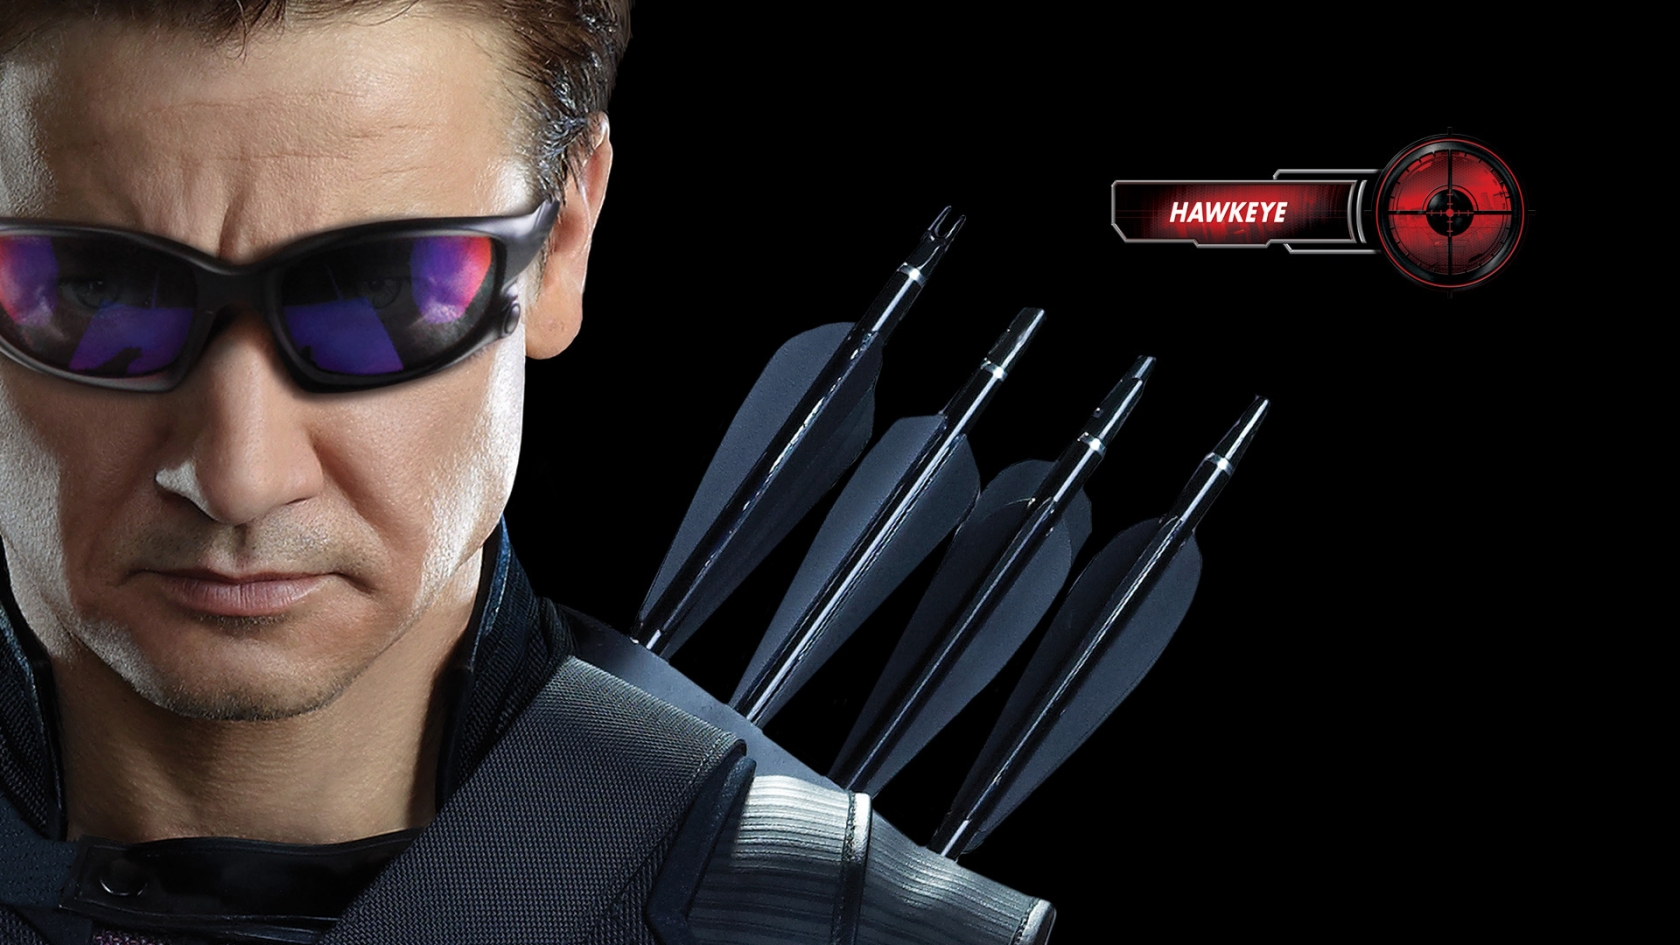 The Avengers Hawkeye for 1680 x 945 HDTV resolution